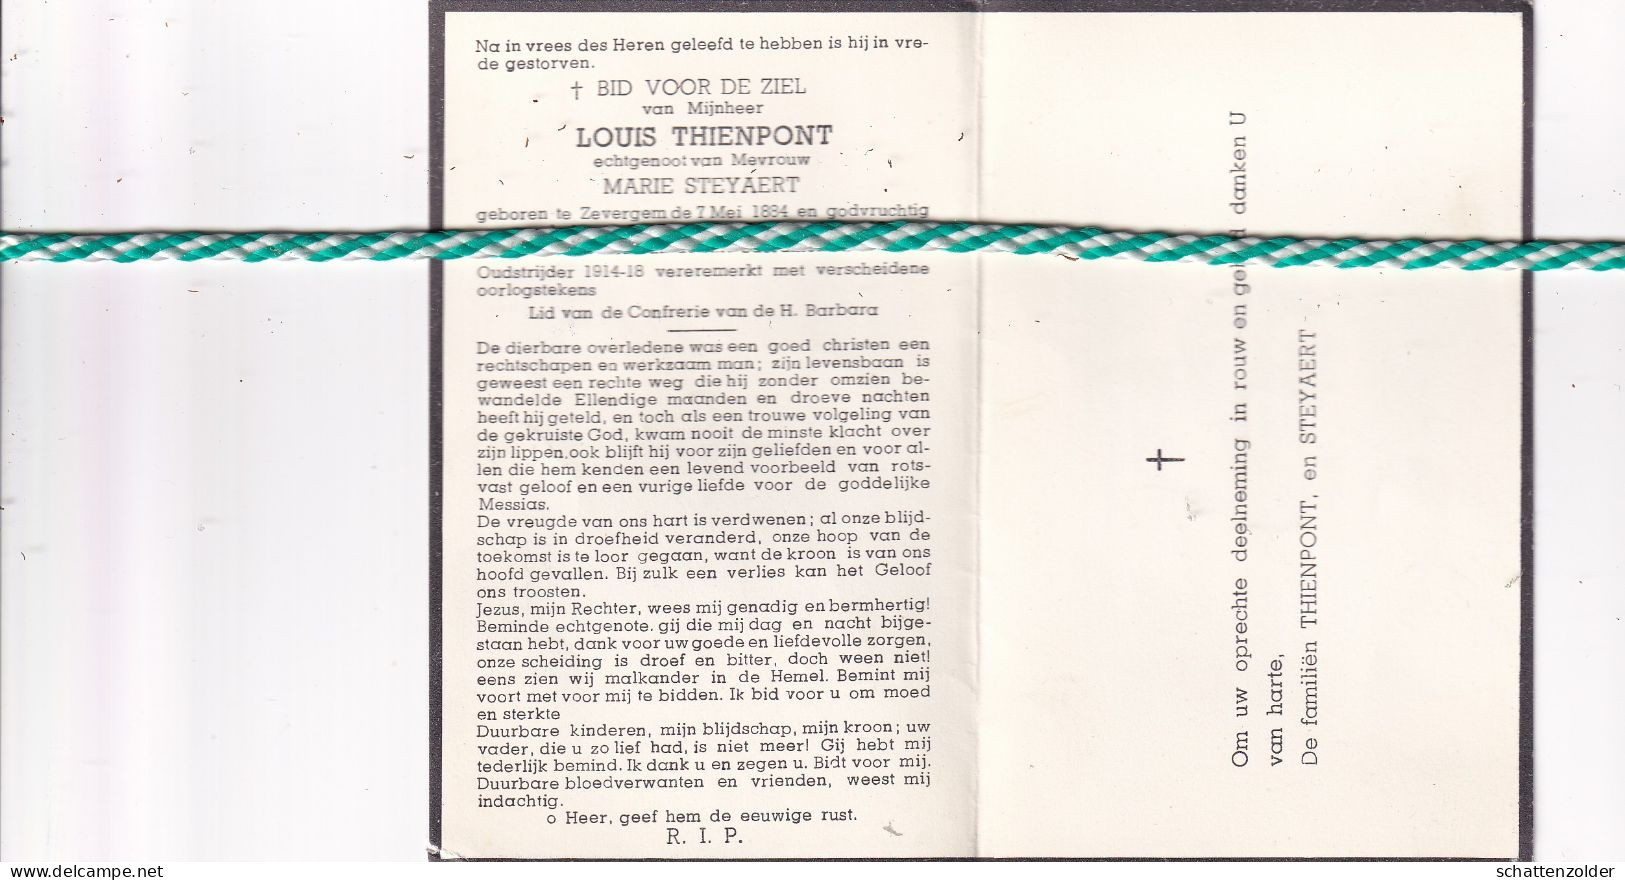 Louis Thienpont-Steyaert, Zevergem 1884, De Pinte 1954. Oud-strijder 14-18 - Obituary Notices